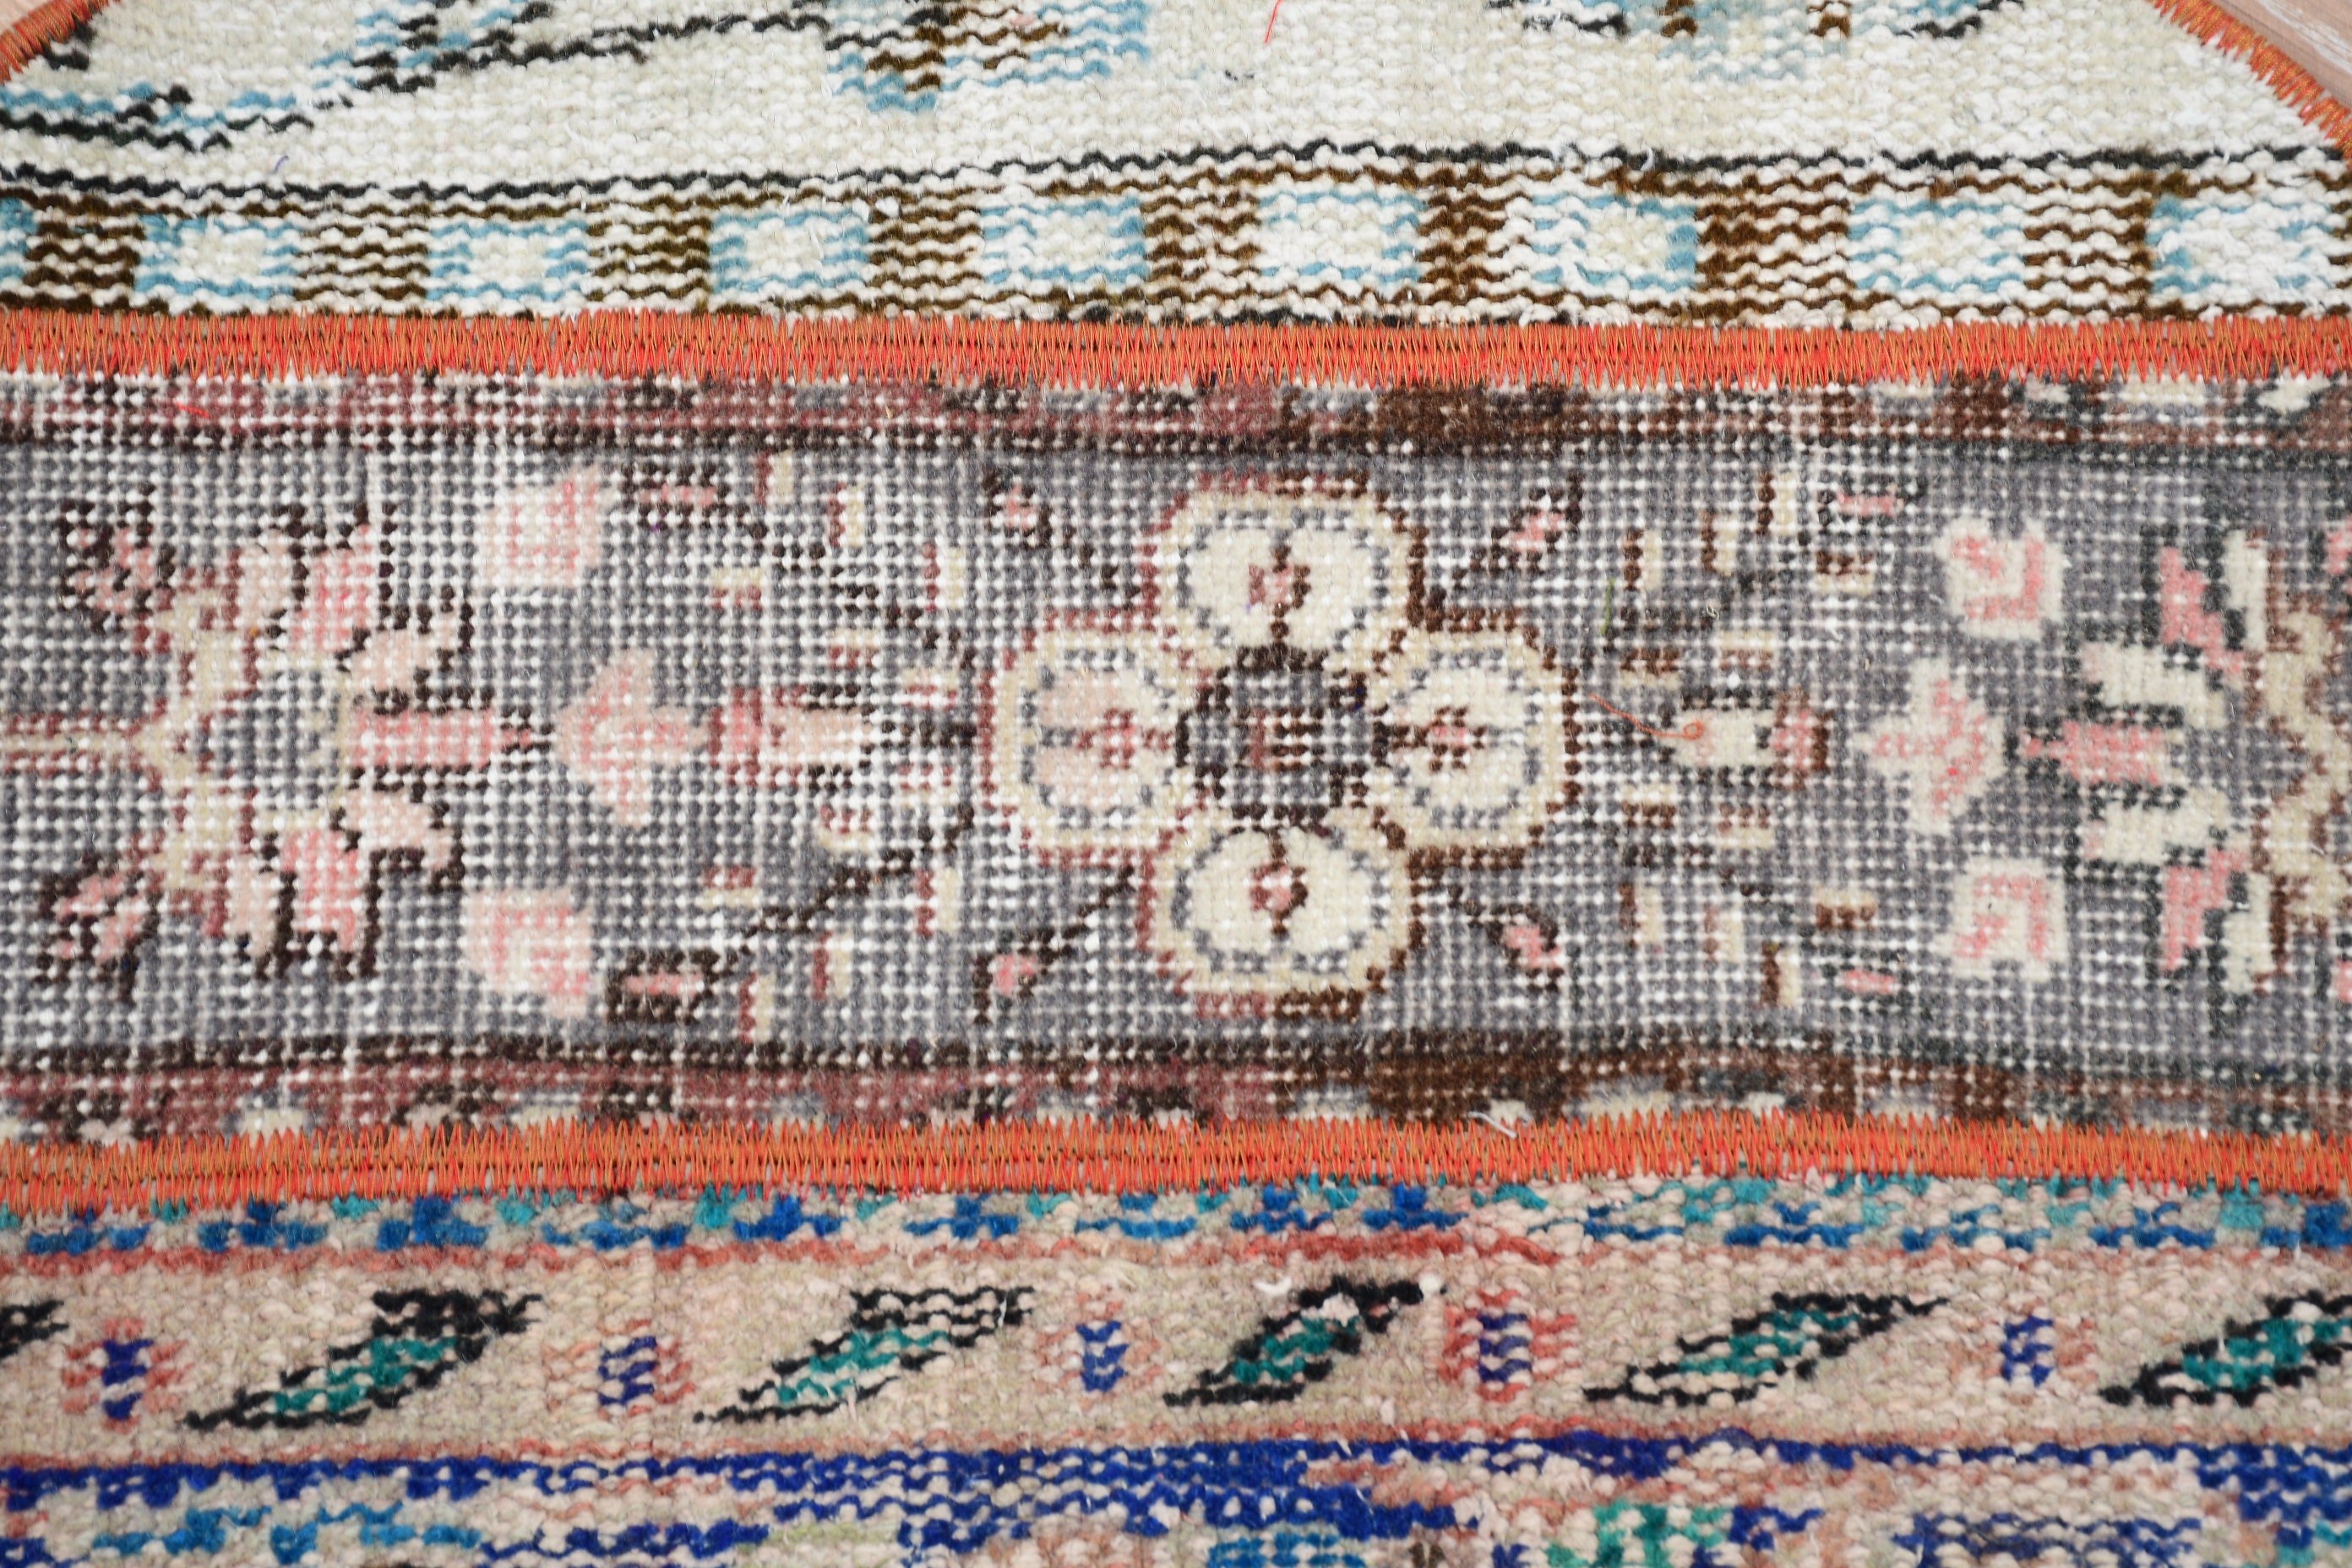 Aztec Rug, Moroccan Rug, Antique Rugs, Beige Wool Rugs, Bathroom Rug, Vintage Rug, 2.5x1.5 ft Small Rug, Turkish Rugs, Rugs for Kitchen